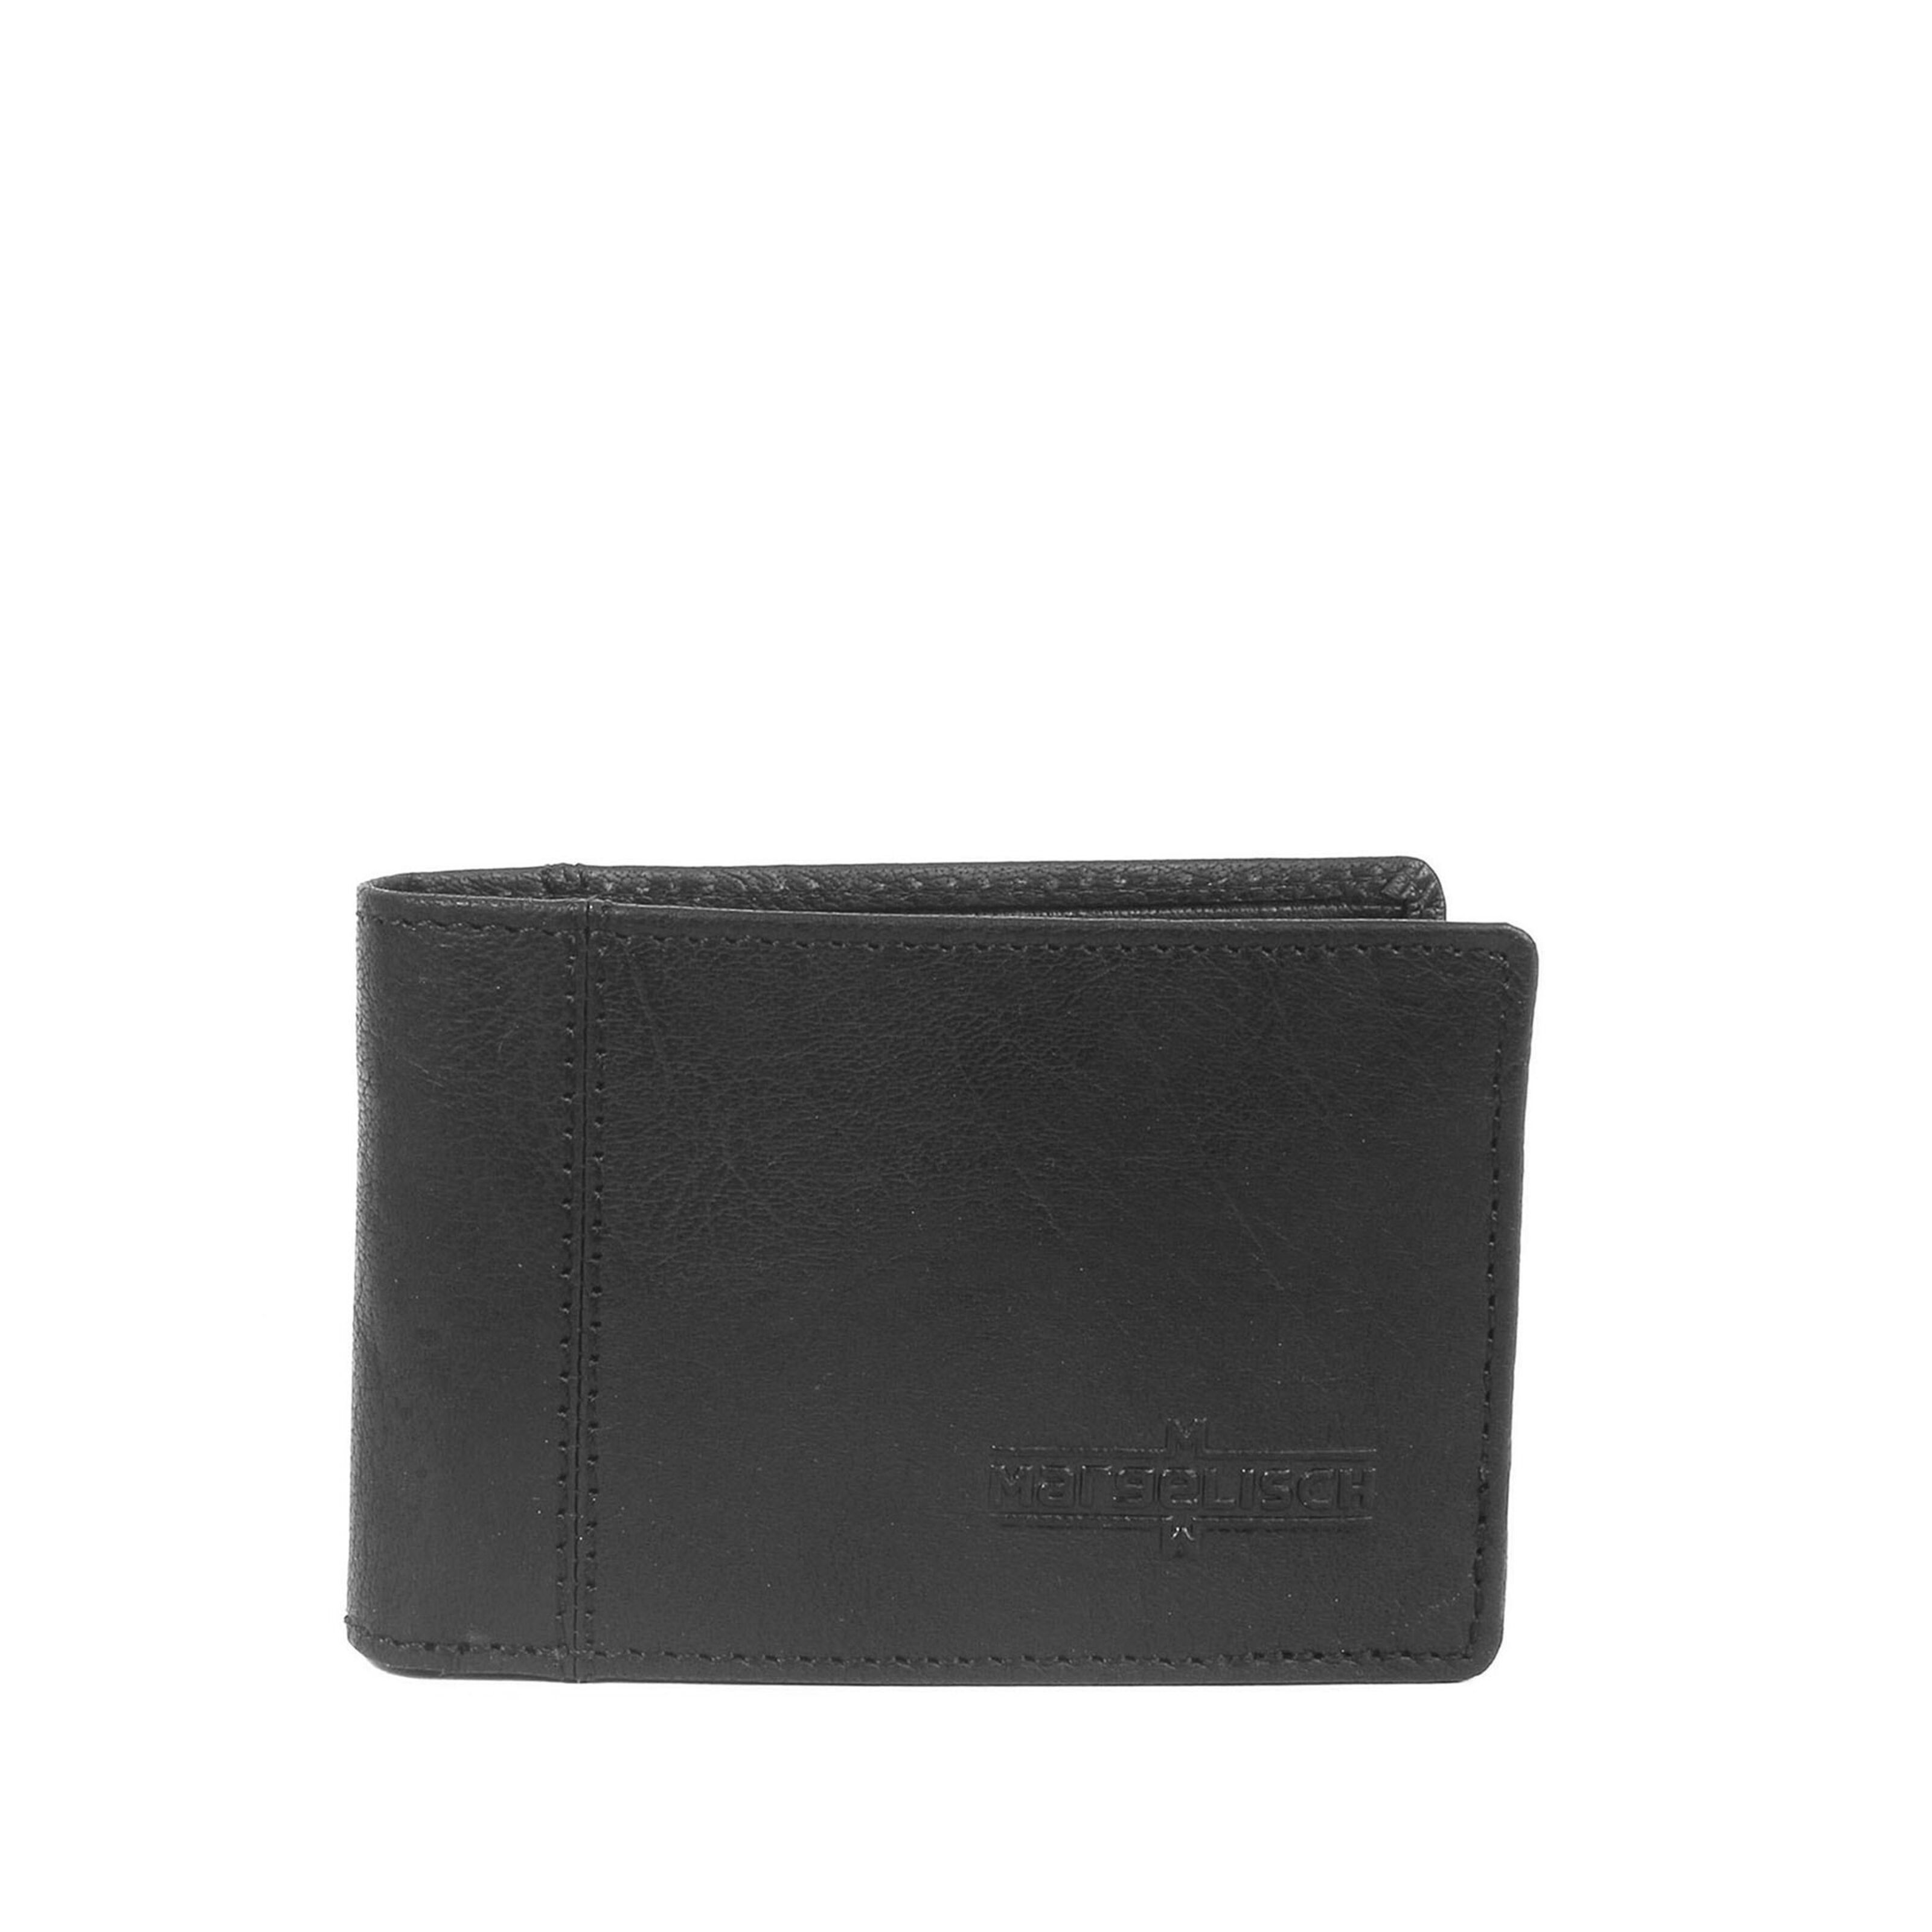 Buy wholesale RFID mini wallet Marcello black 2